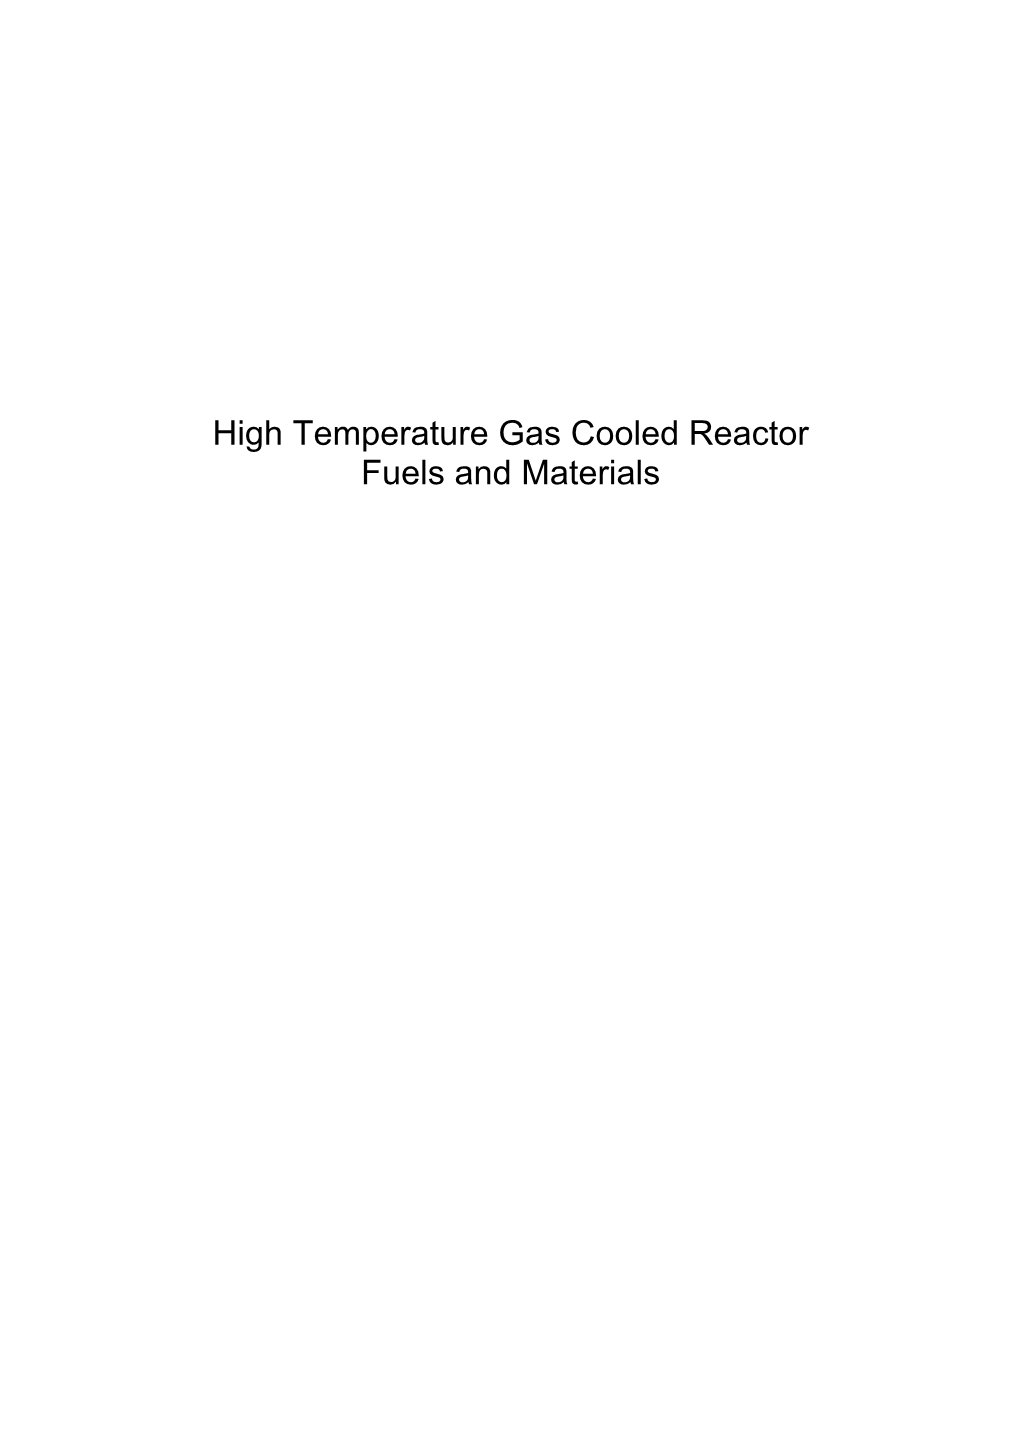 High Temperature Gas Cooled Reactor Fuels and Materials